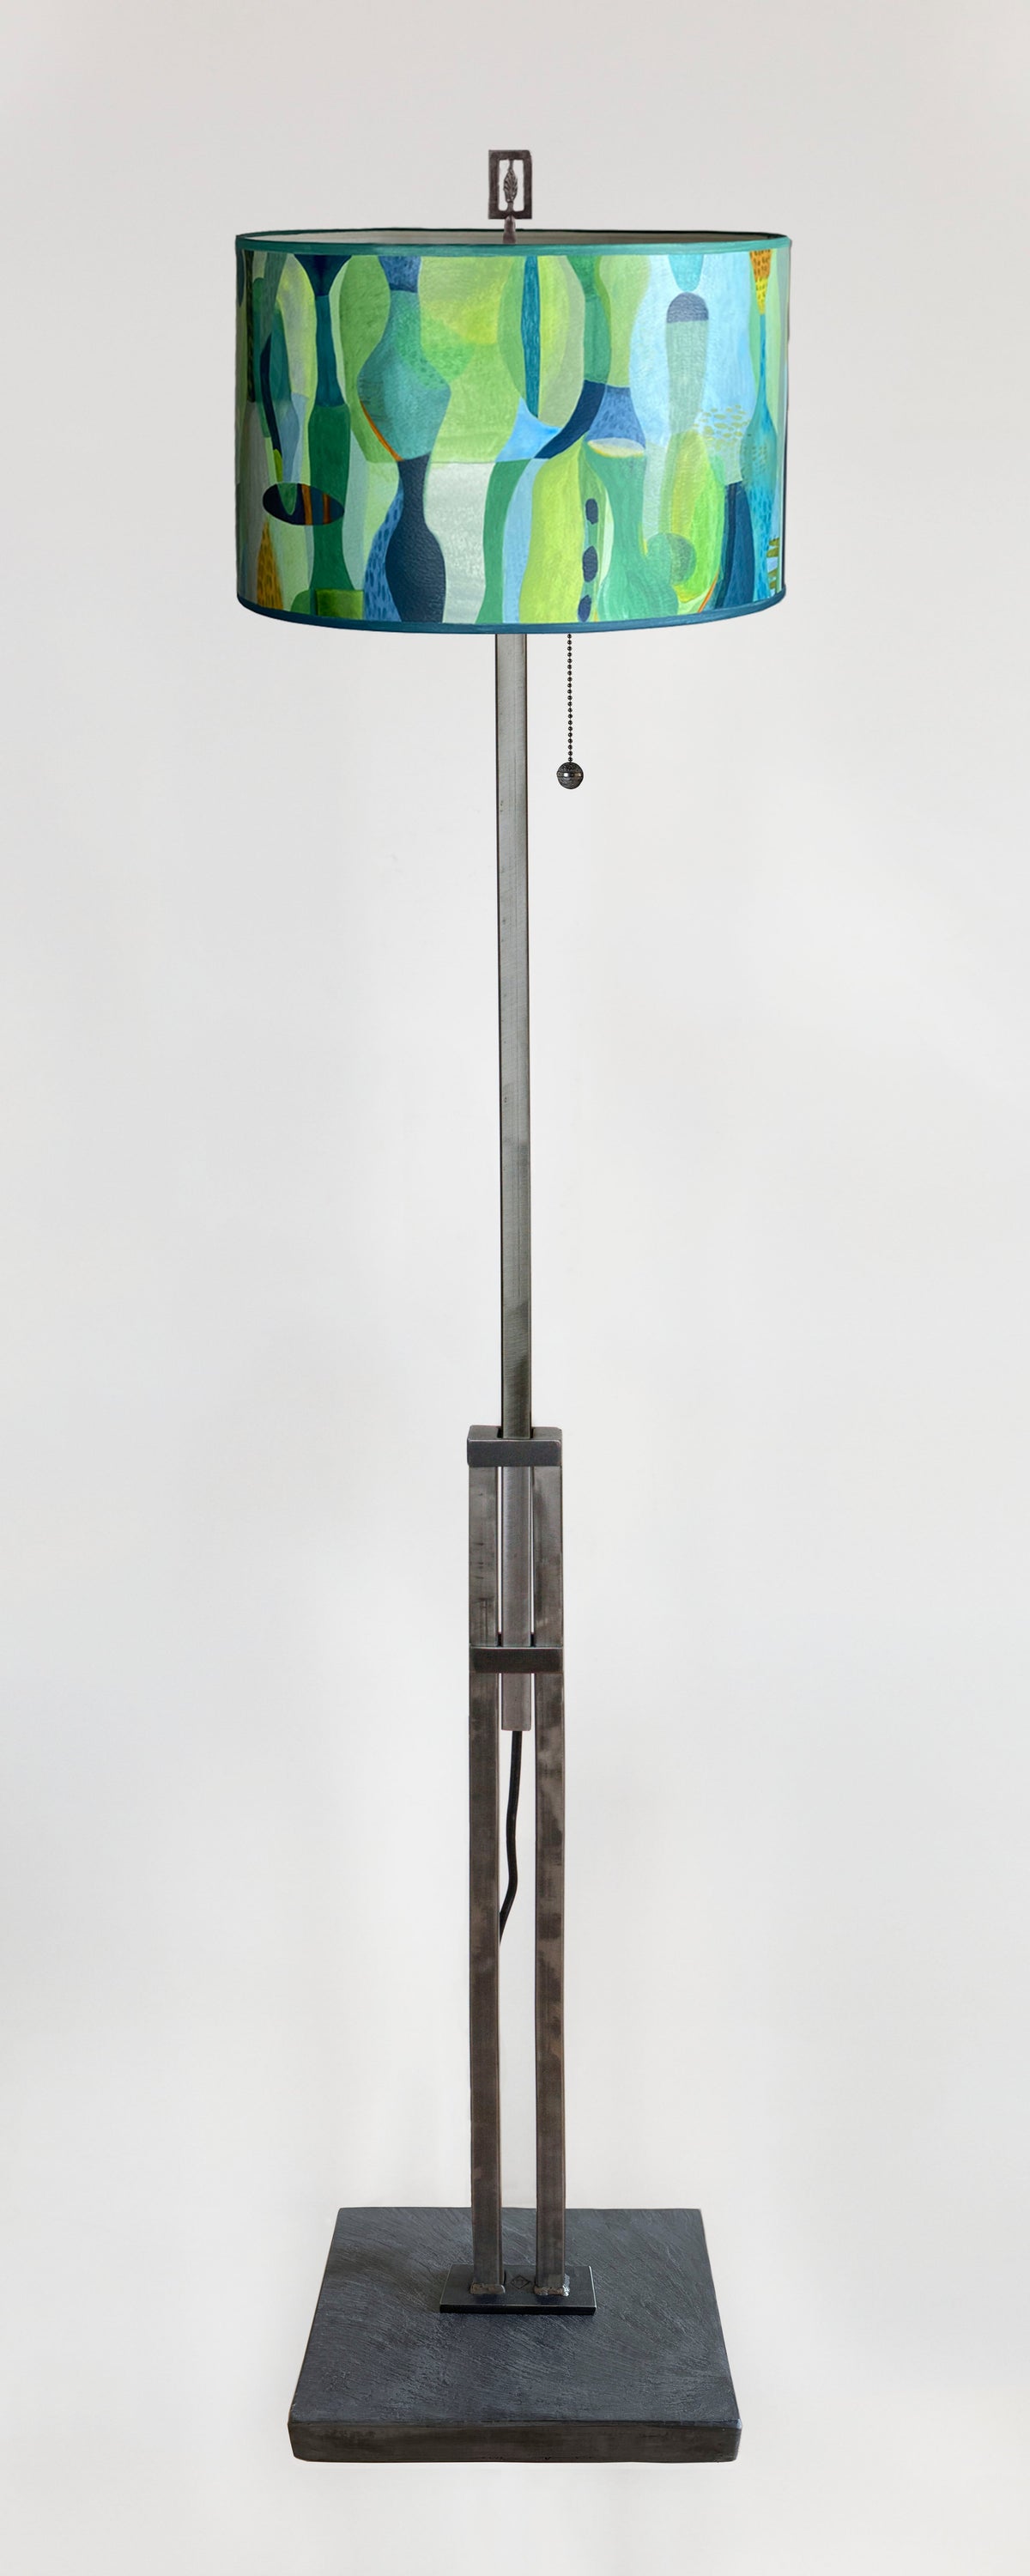 Adjustable-Height Steel Floor Lamp with Large Drum Shade in Riviera in Citrus